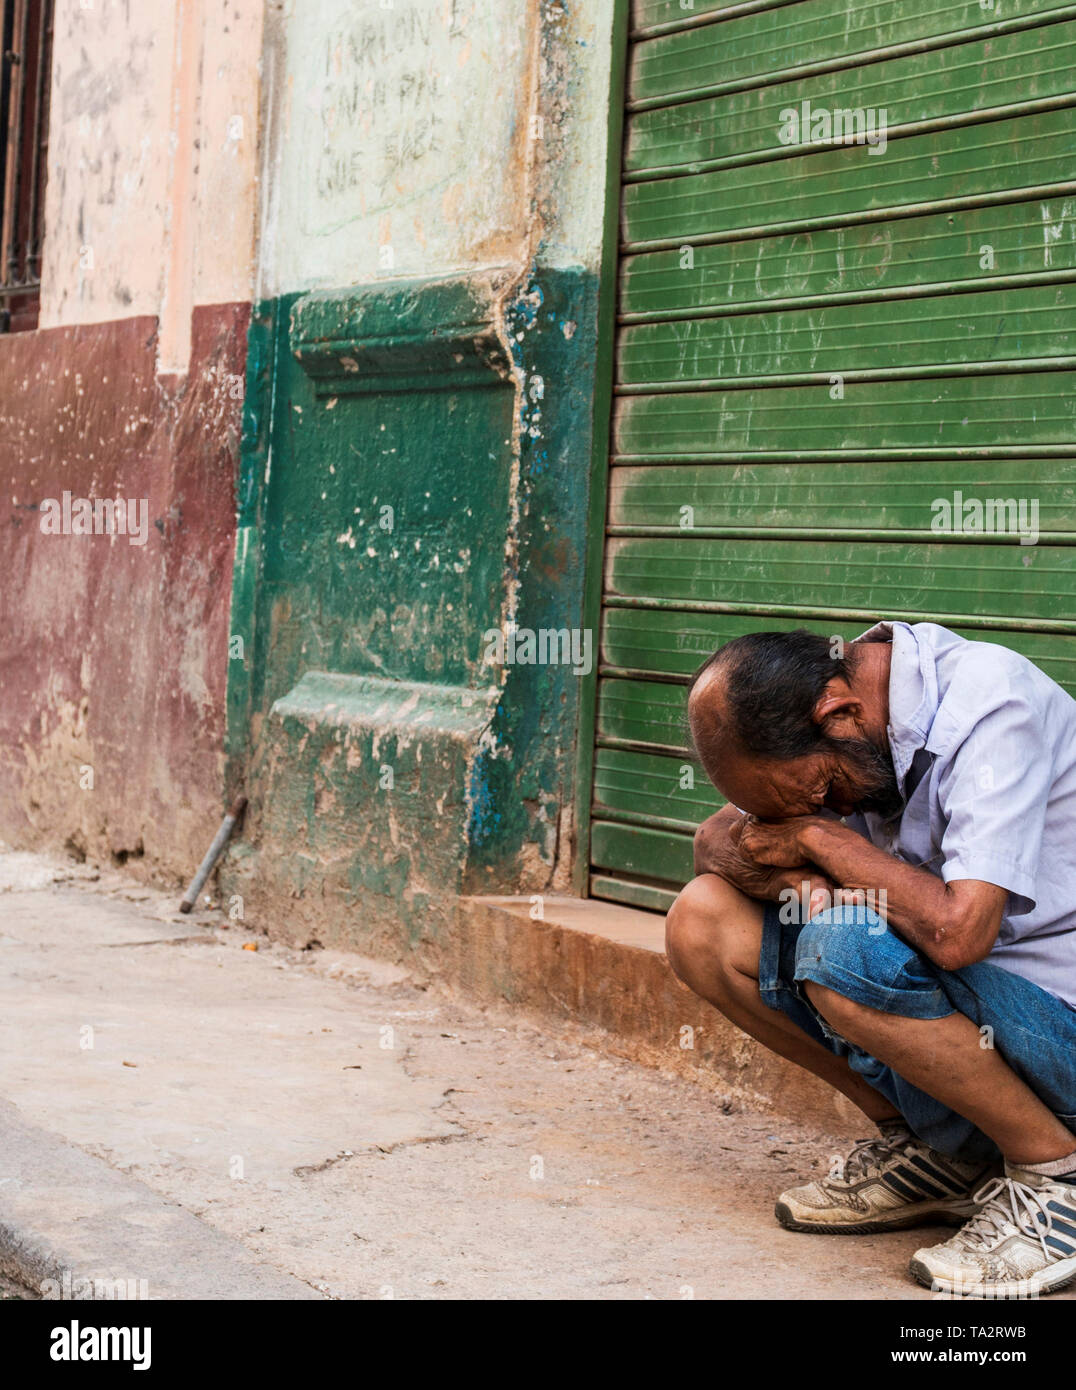 Havana, Cuba - 25 July 2018: Cuban man looks to be in dispair sitting on a ledge in front of old run down building in Old Havana Cuba. Stock Photo